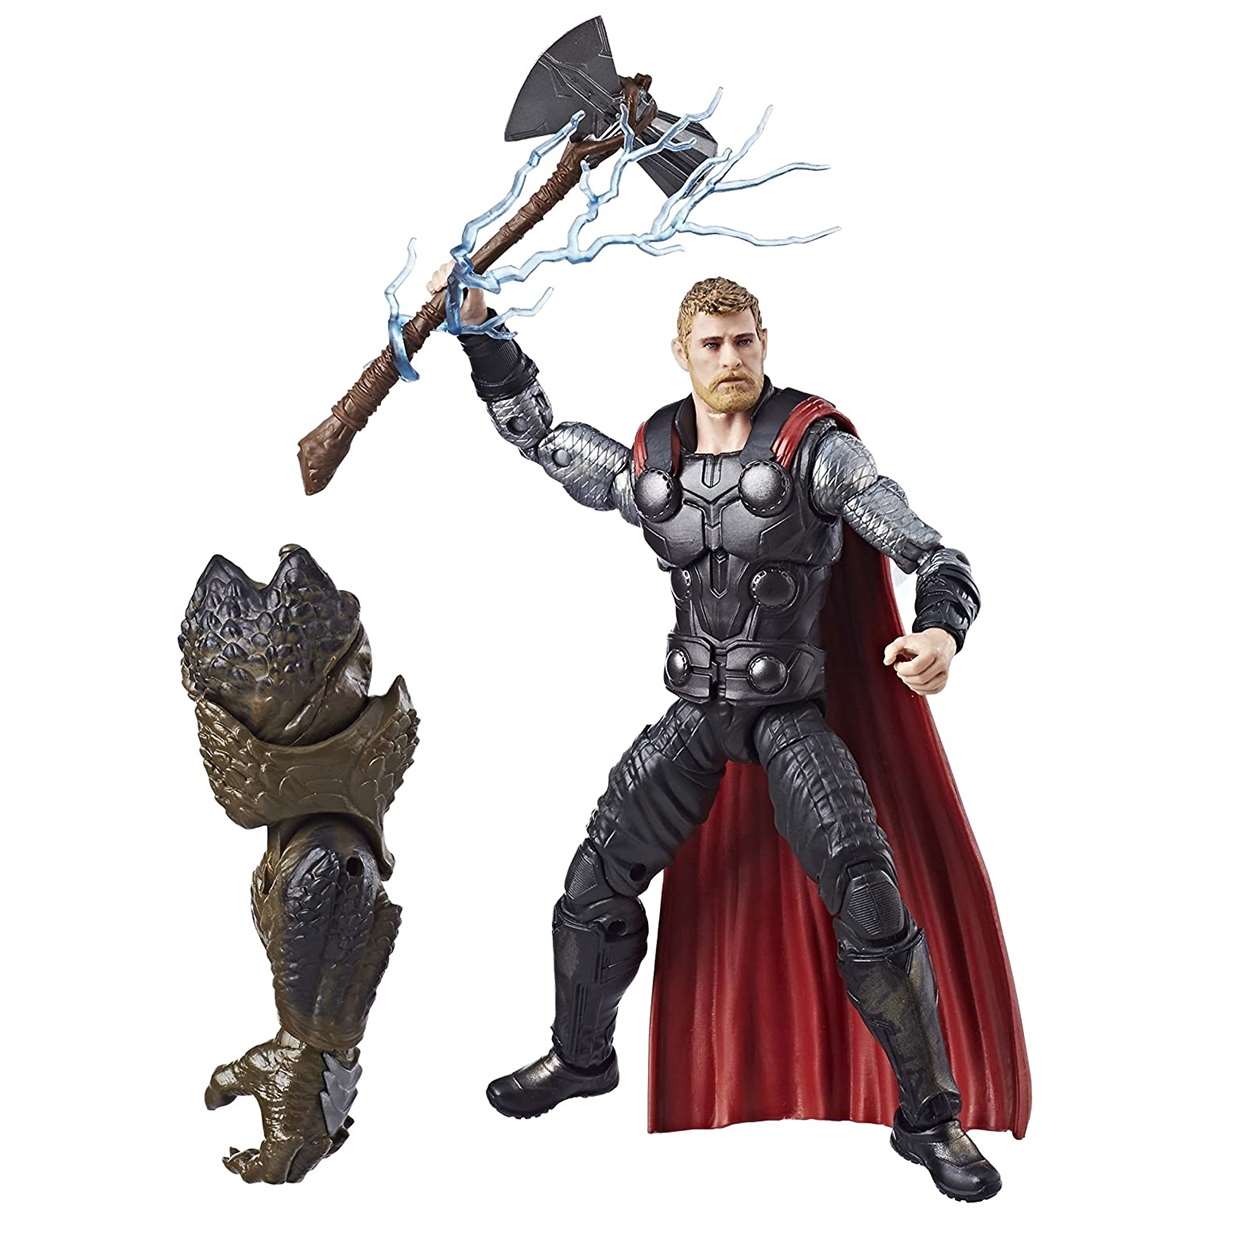 Thor Figura Marvel Avengers Infinity War Legends Series